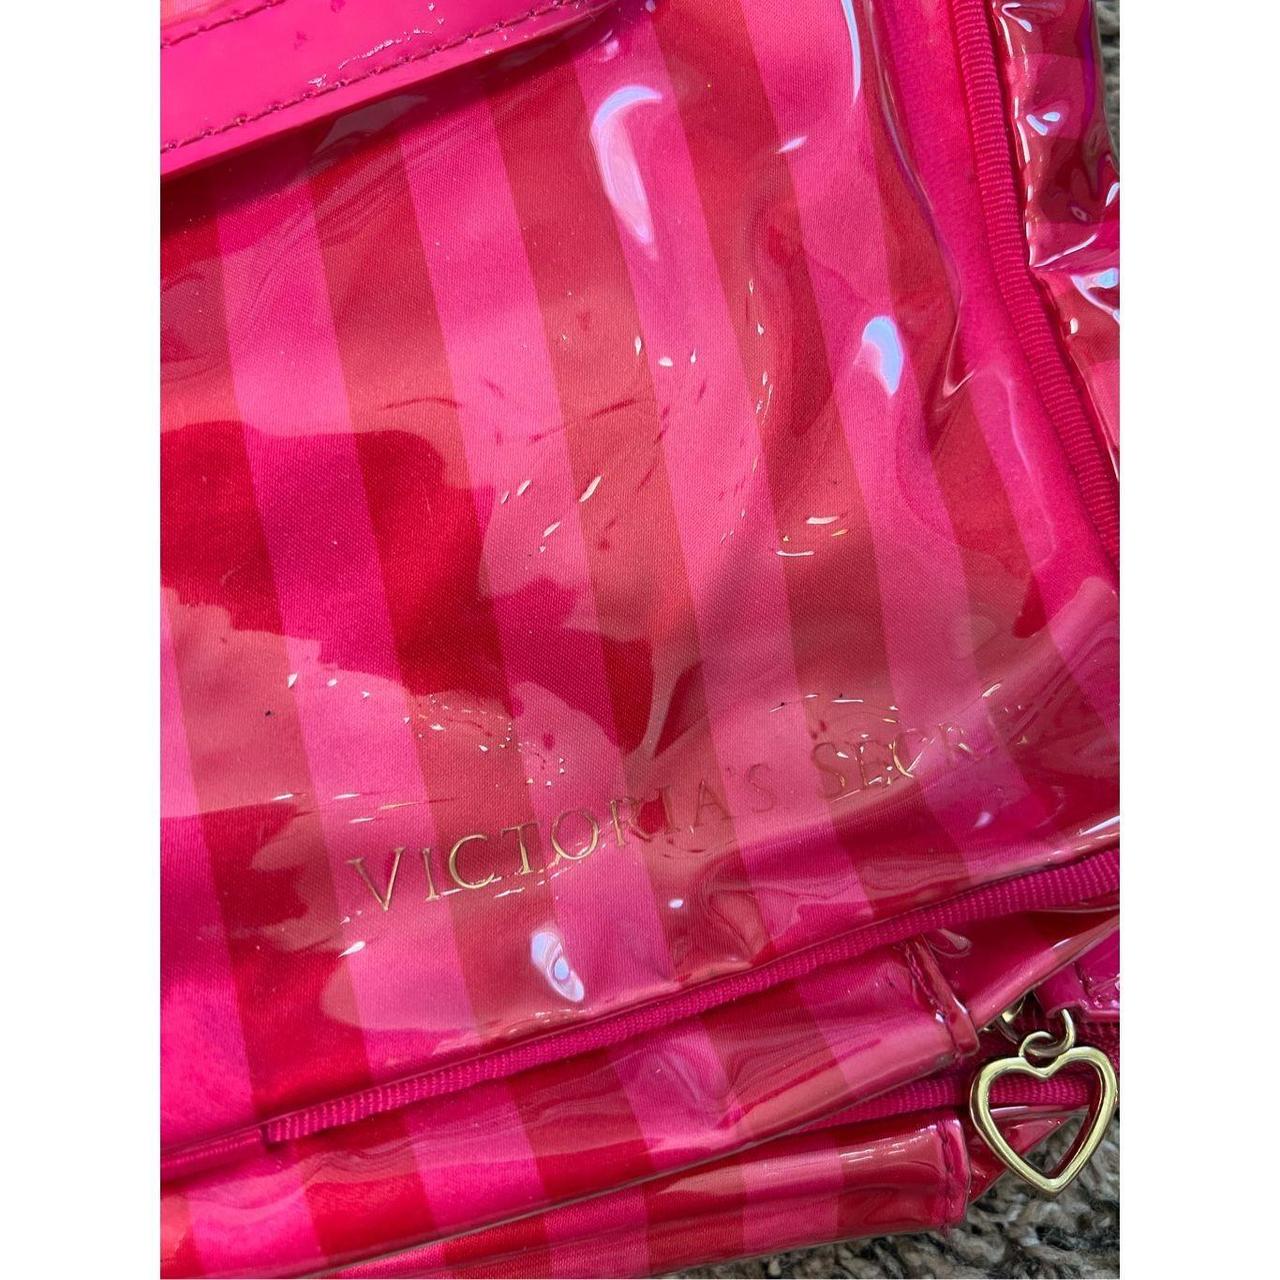 Victoria’s Secret travel makeup bag red pink one